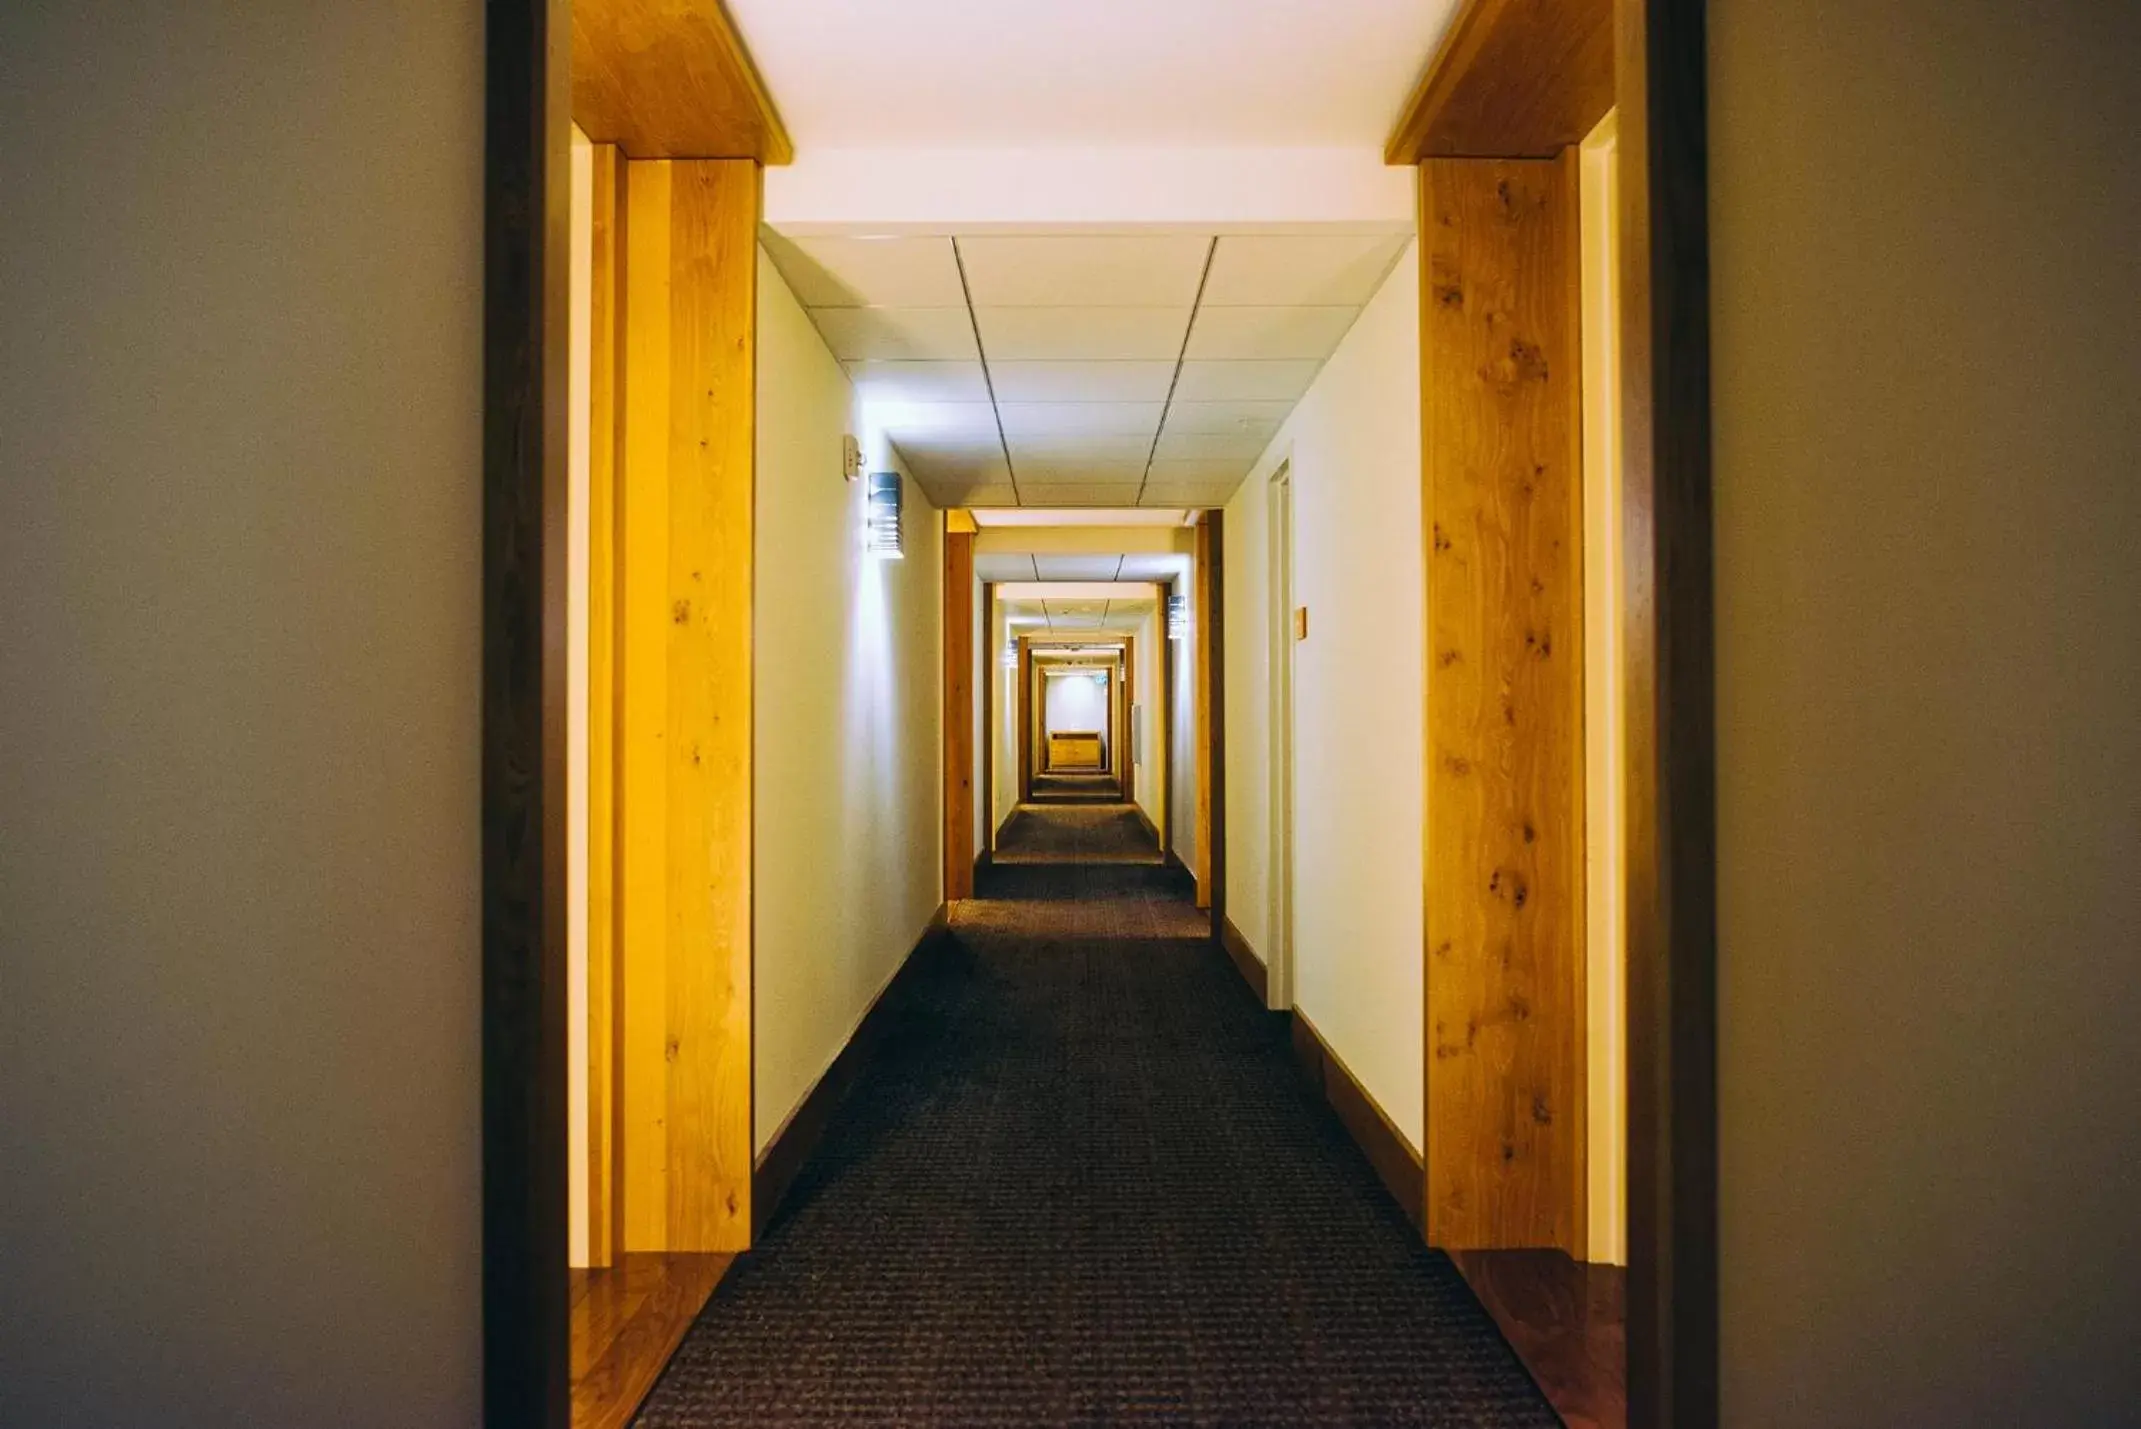 Area and facilities in Hotel Vermont Burlington